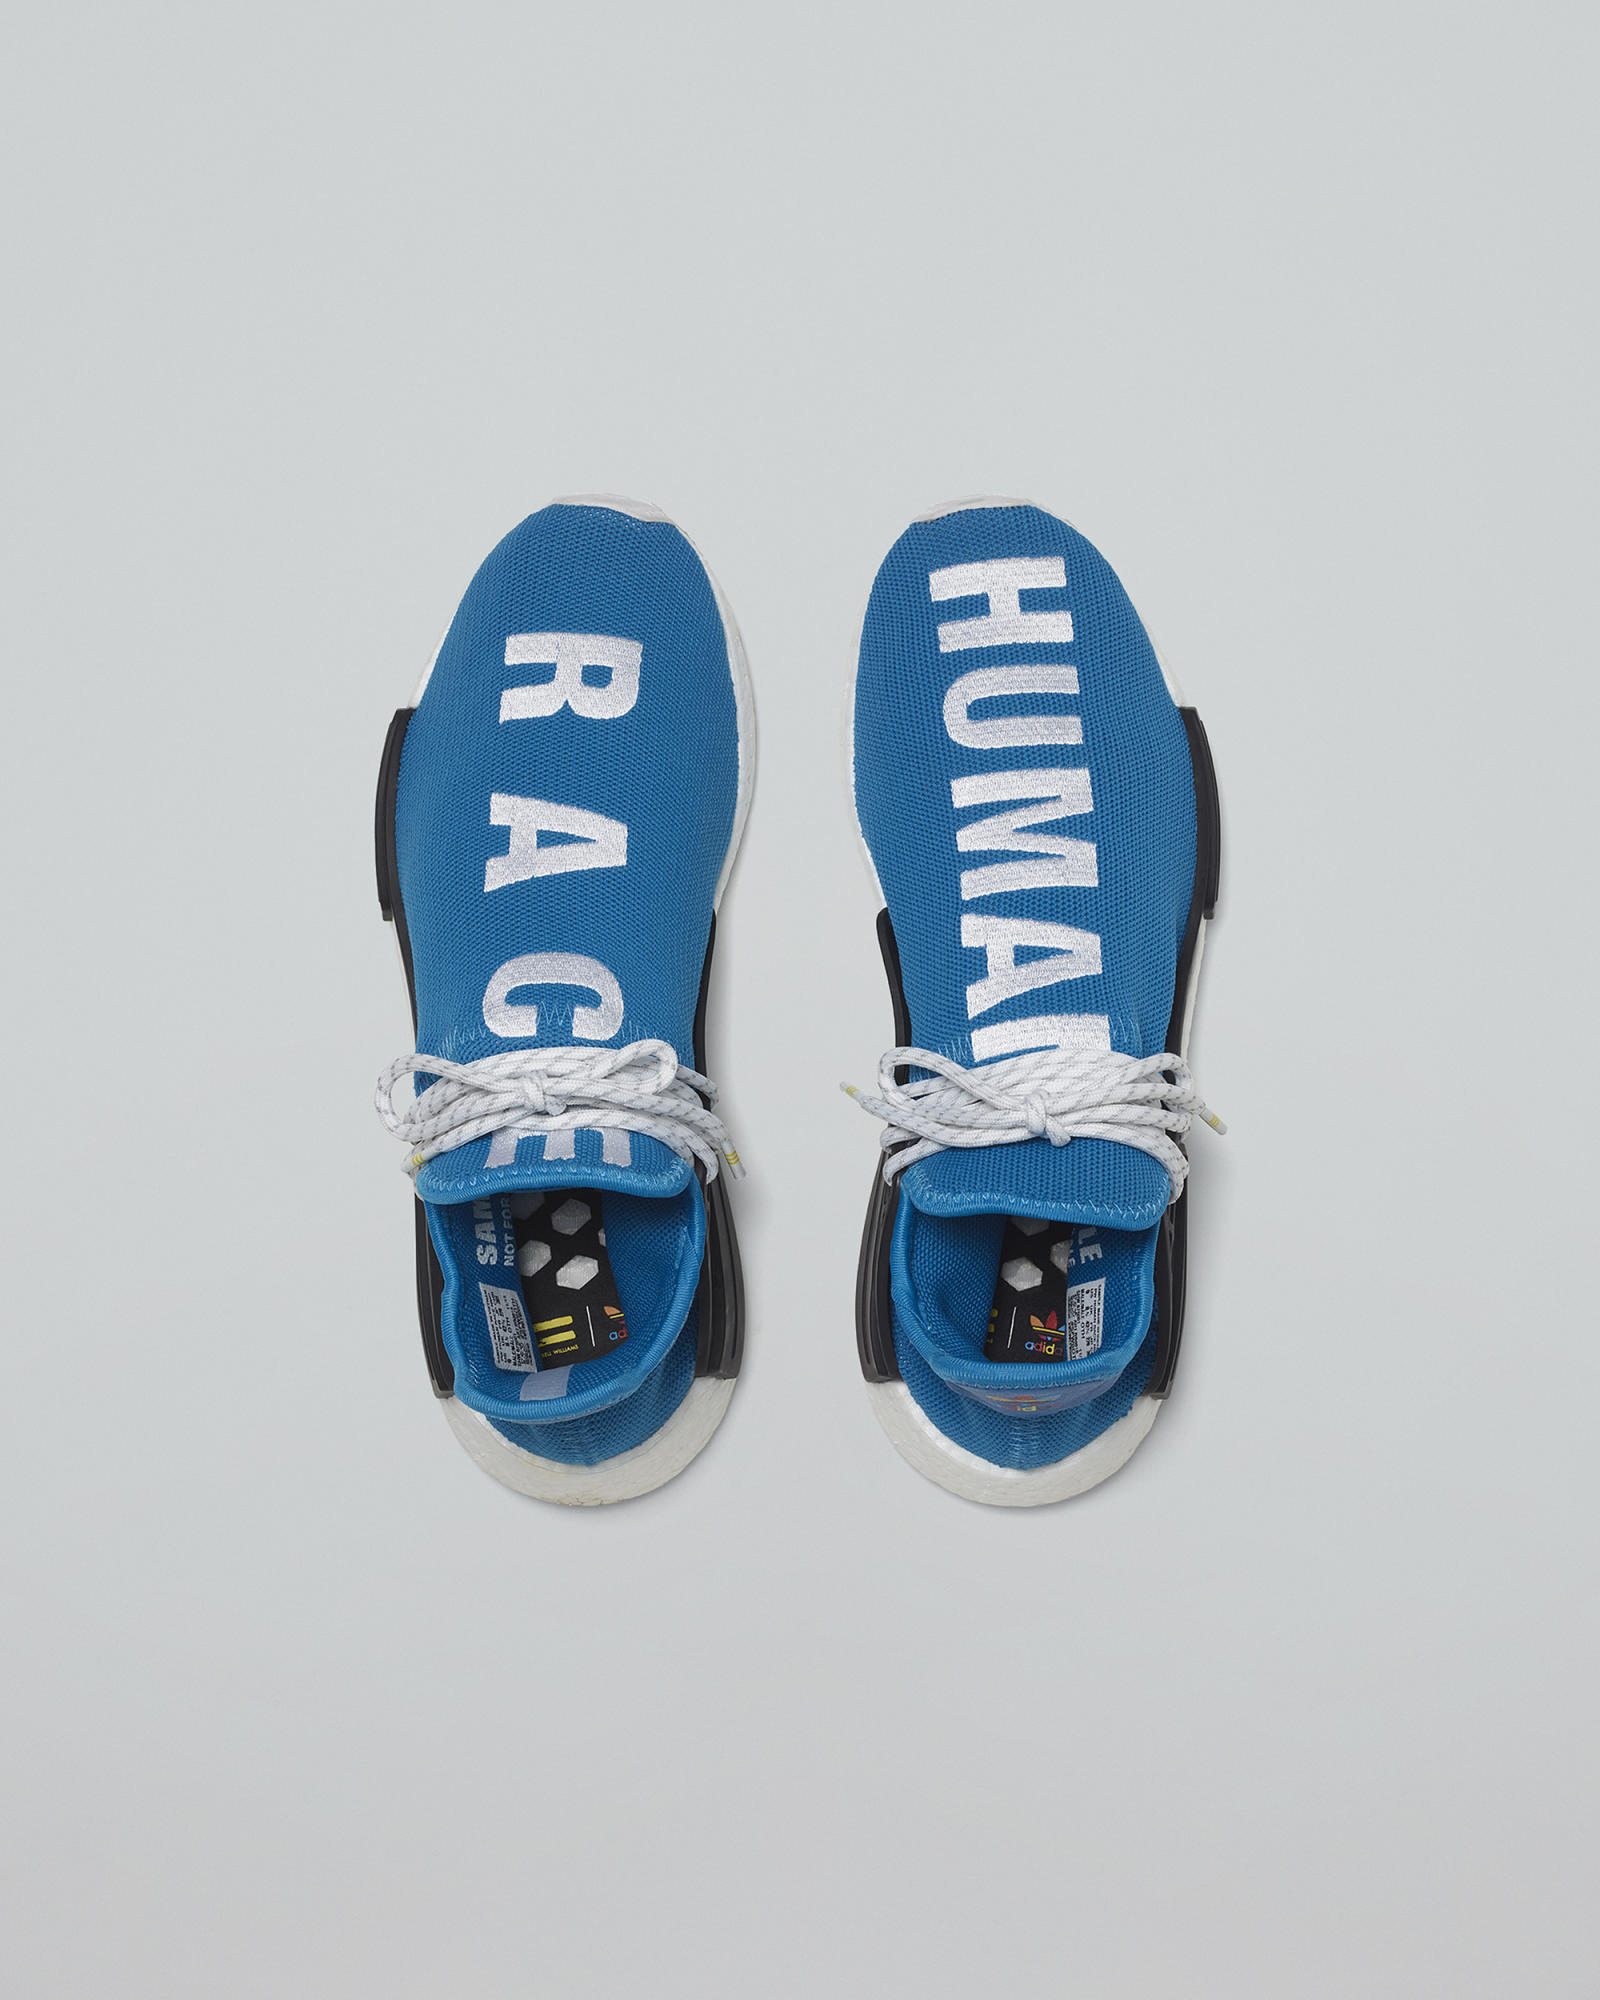 Adidas-NMD-Hu-Human-Race-Lot-of-4-Pairs-8